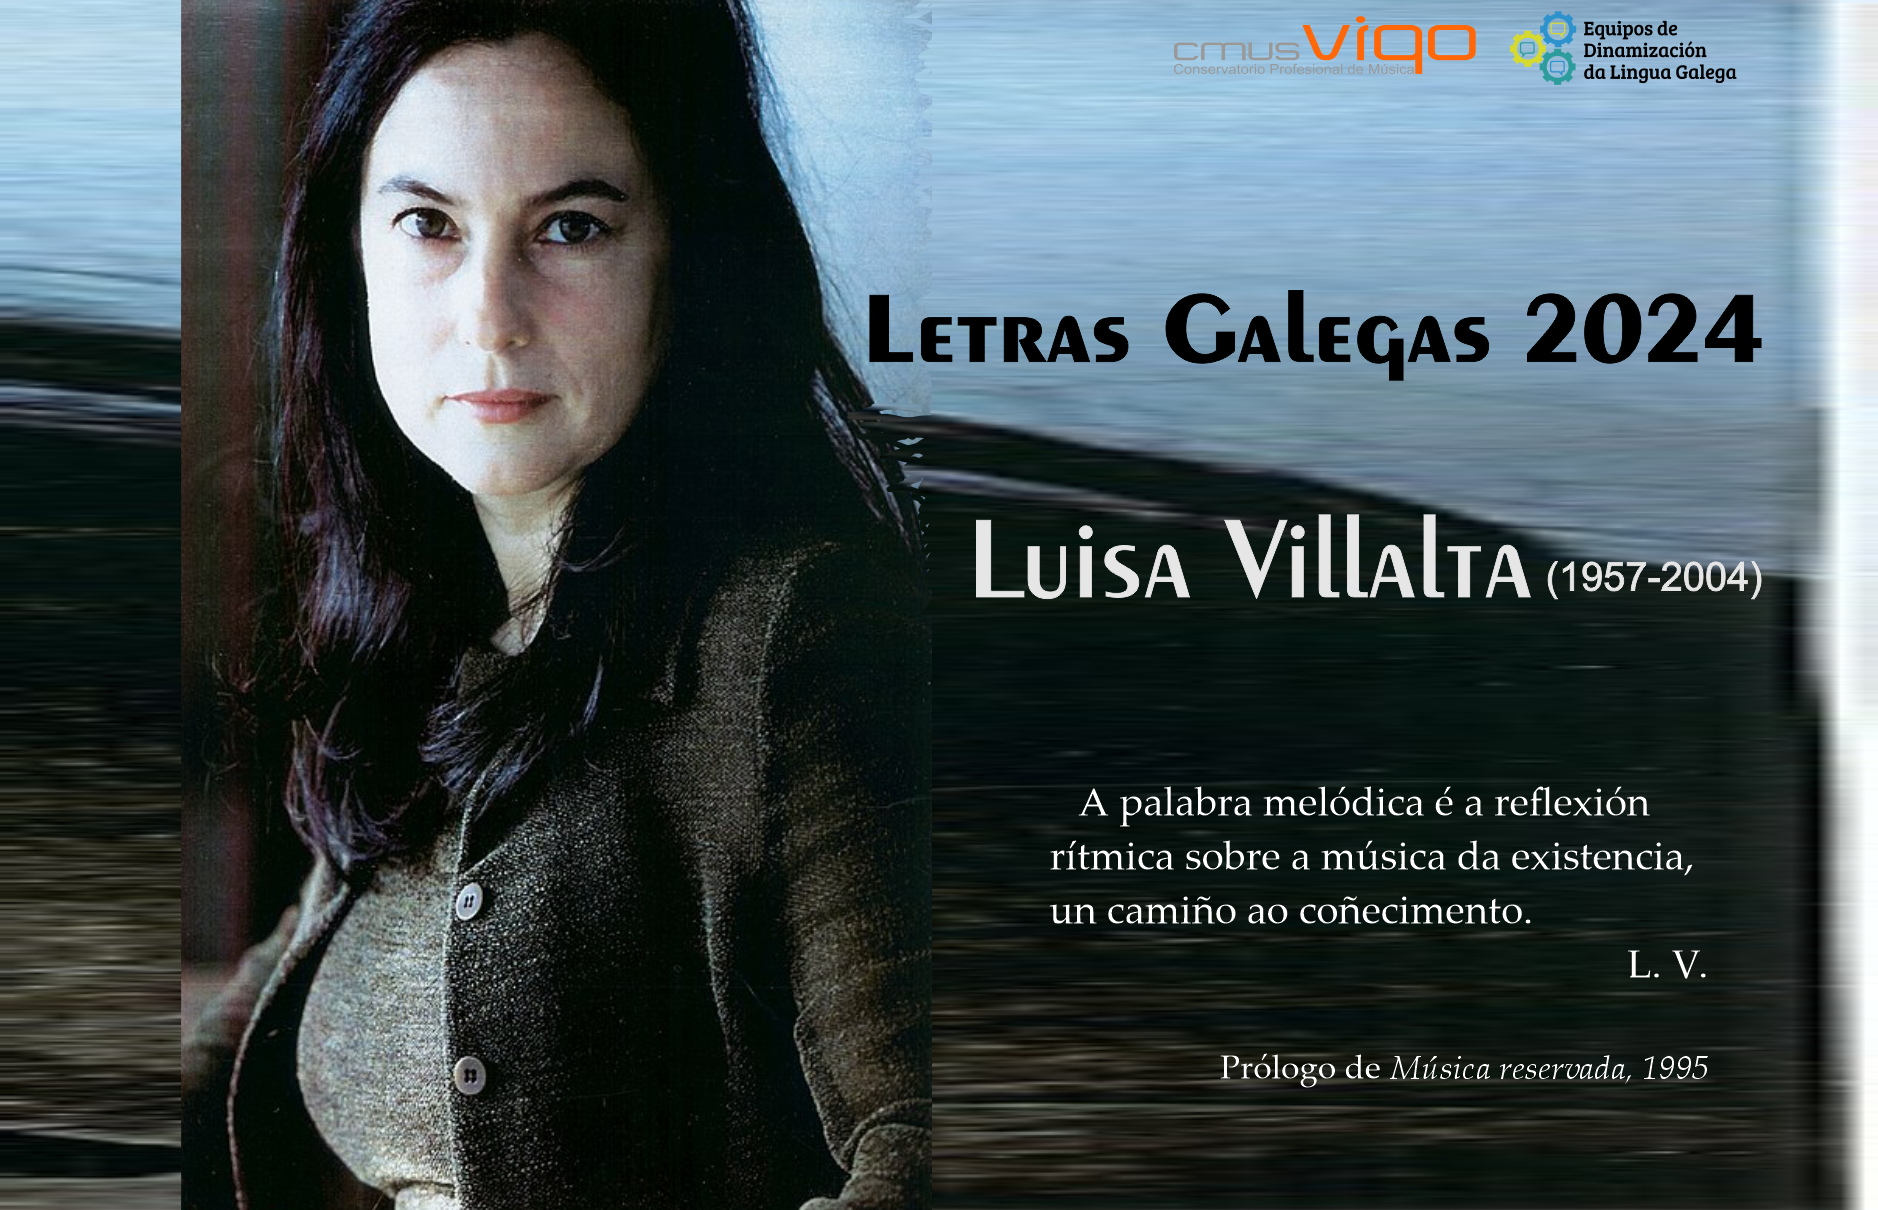 Letras Galegas 2024: Luisa Villalta